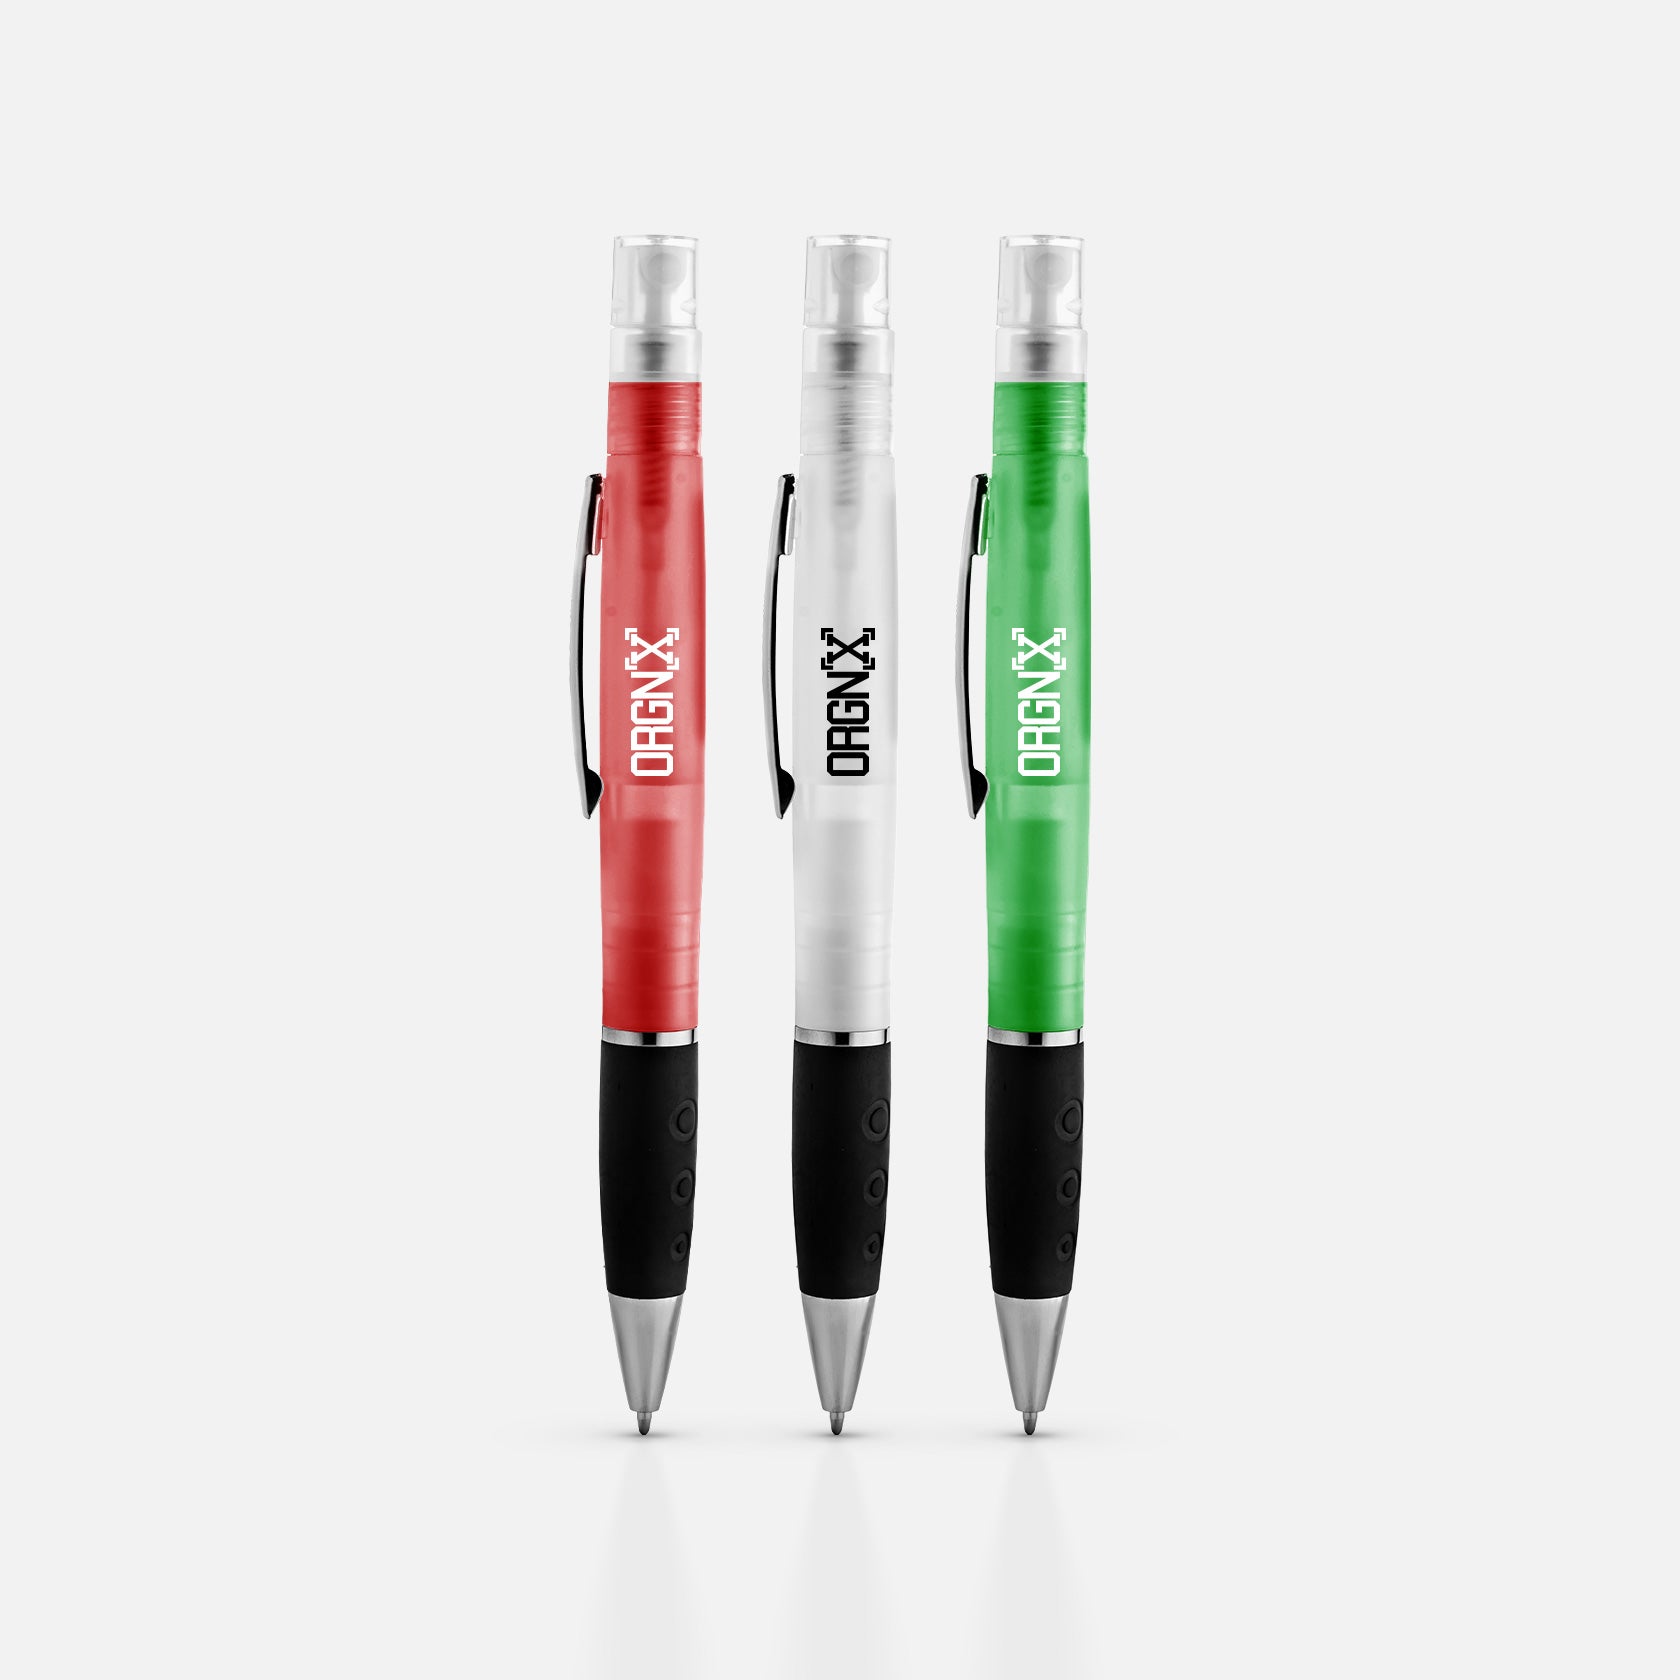 ORGNX Spray Pens